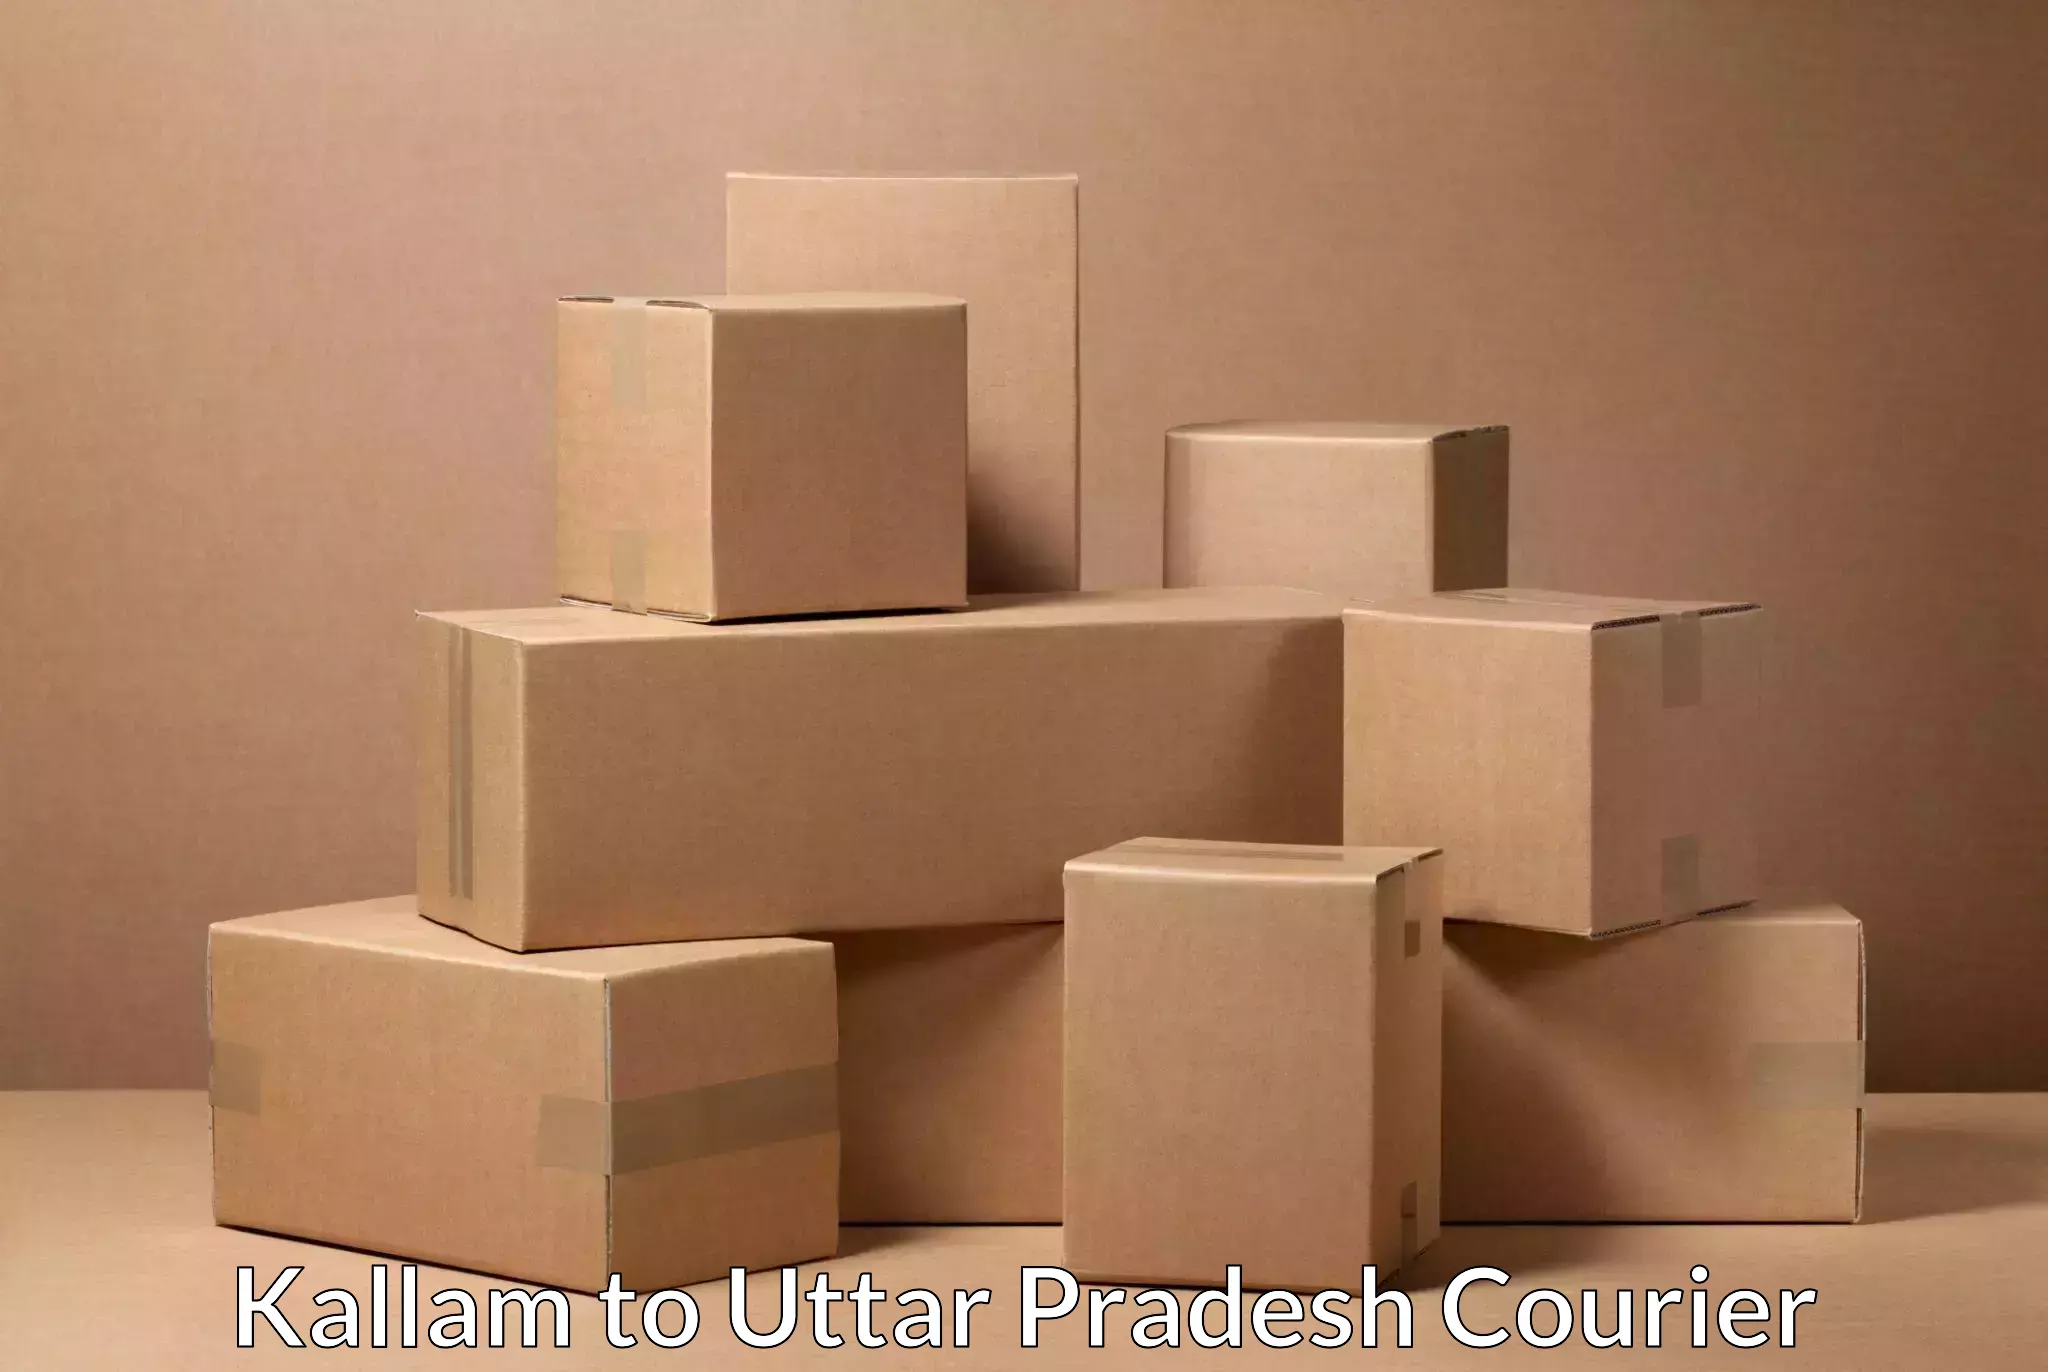 State-of-the-art courier technology Kallam to Mungra Badshahpur